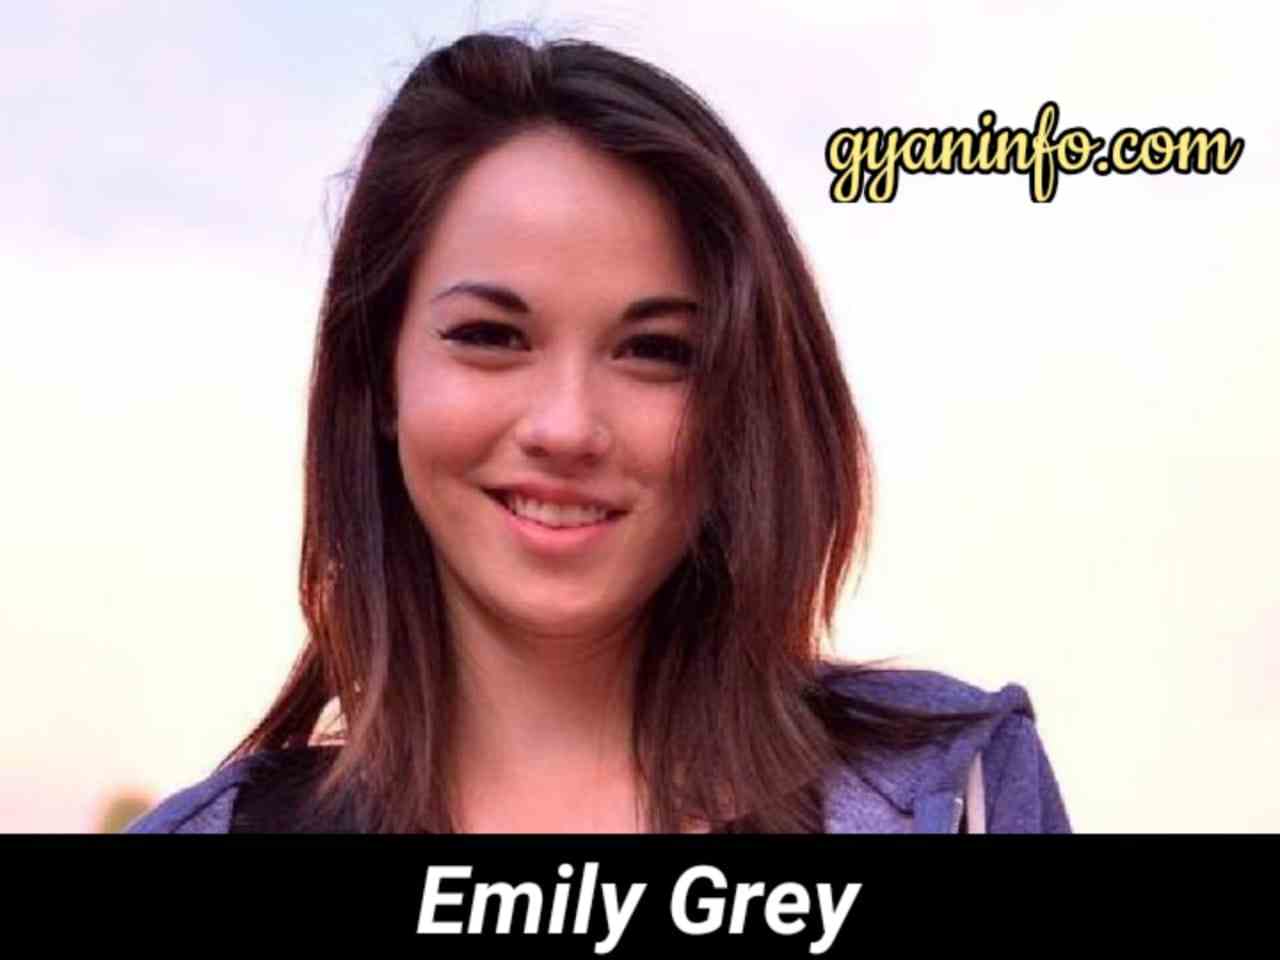 Emily Grey Biography, Height, Age, Weight, Body Measurements, Boyfriend, Net Worth, Wiki & More